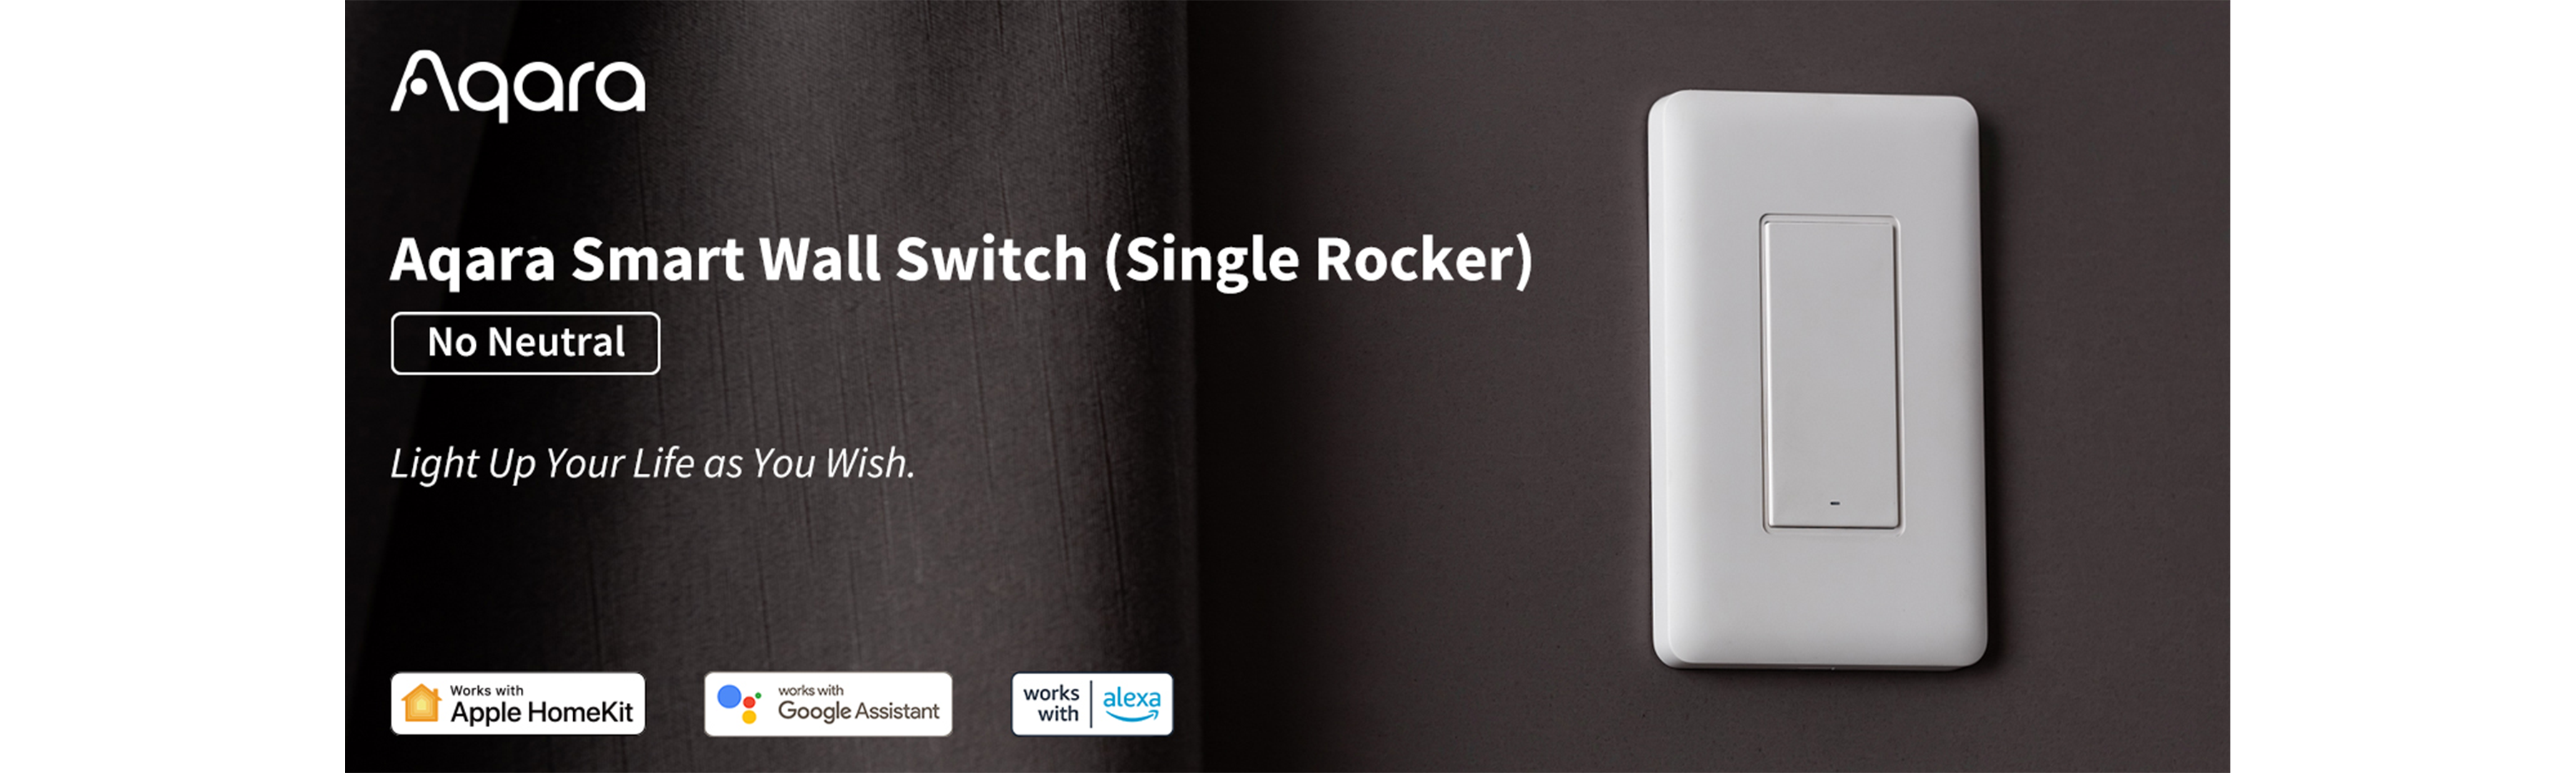 Aqara Smart Wall Switch (No Neutral, Single Rocker), Requires Hub